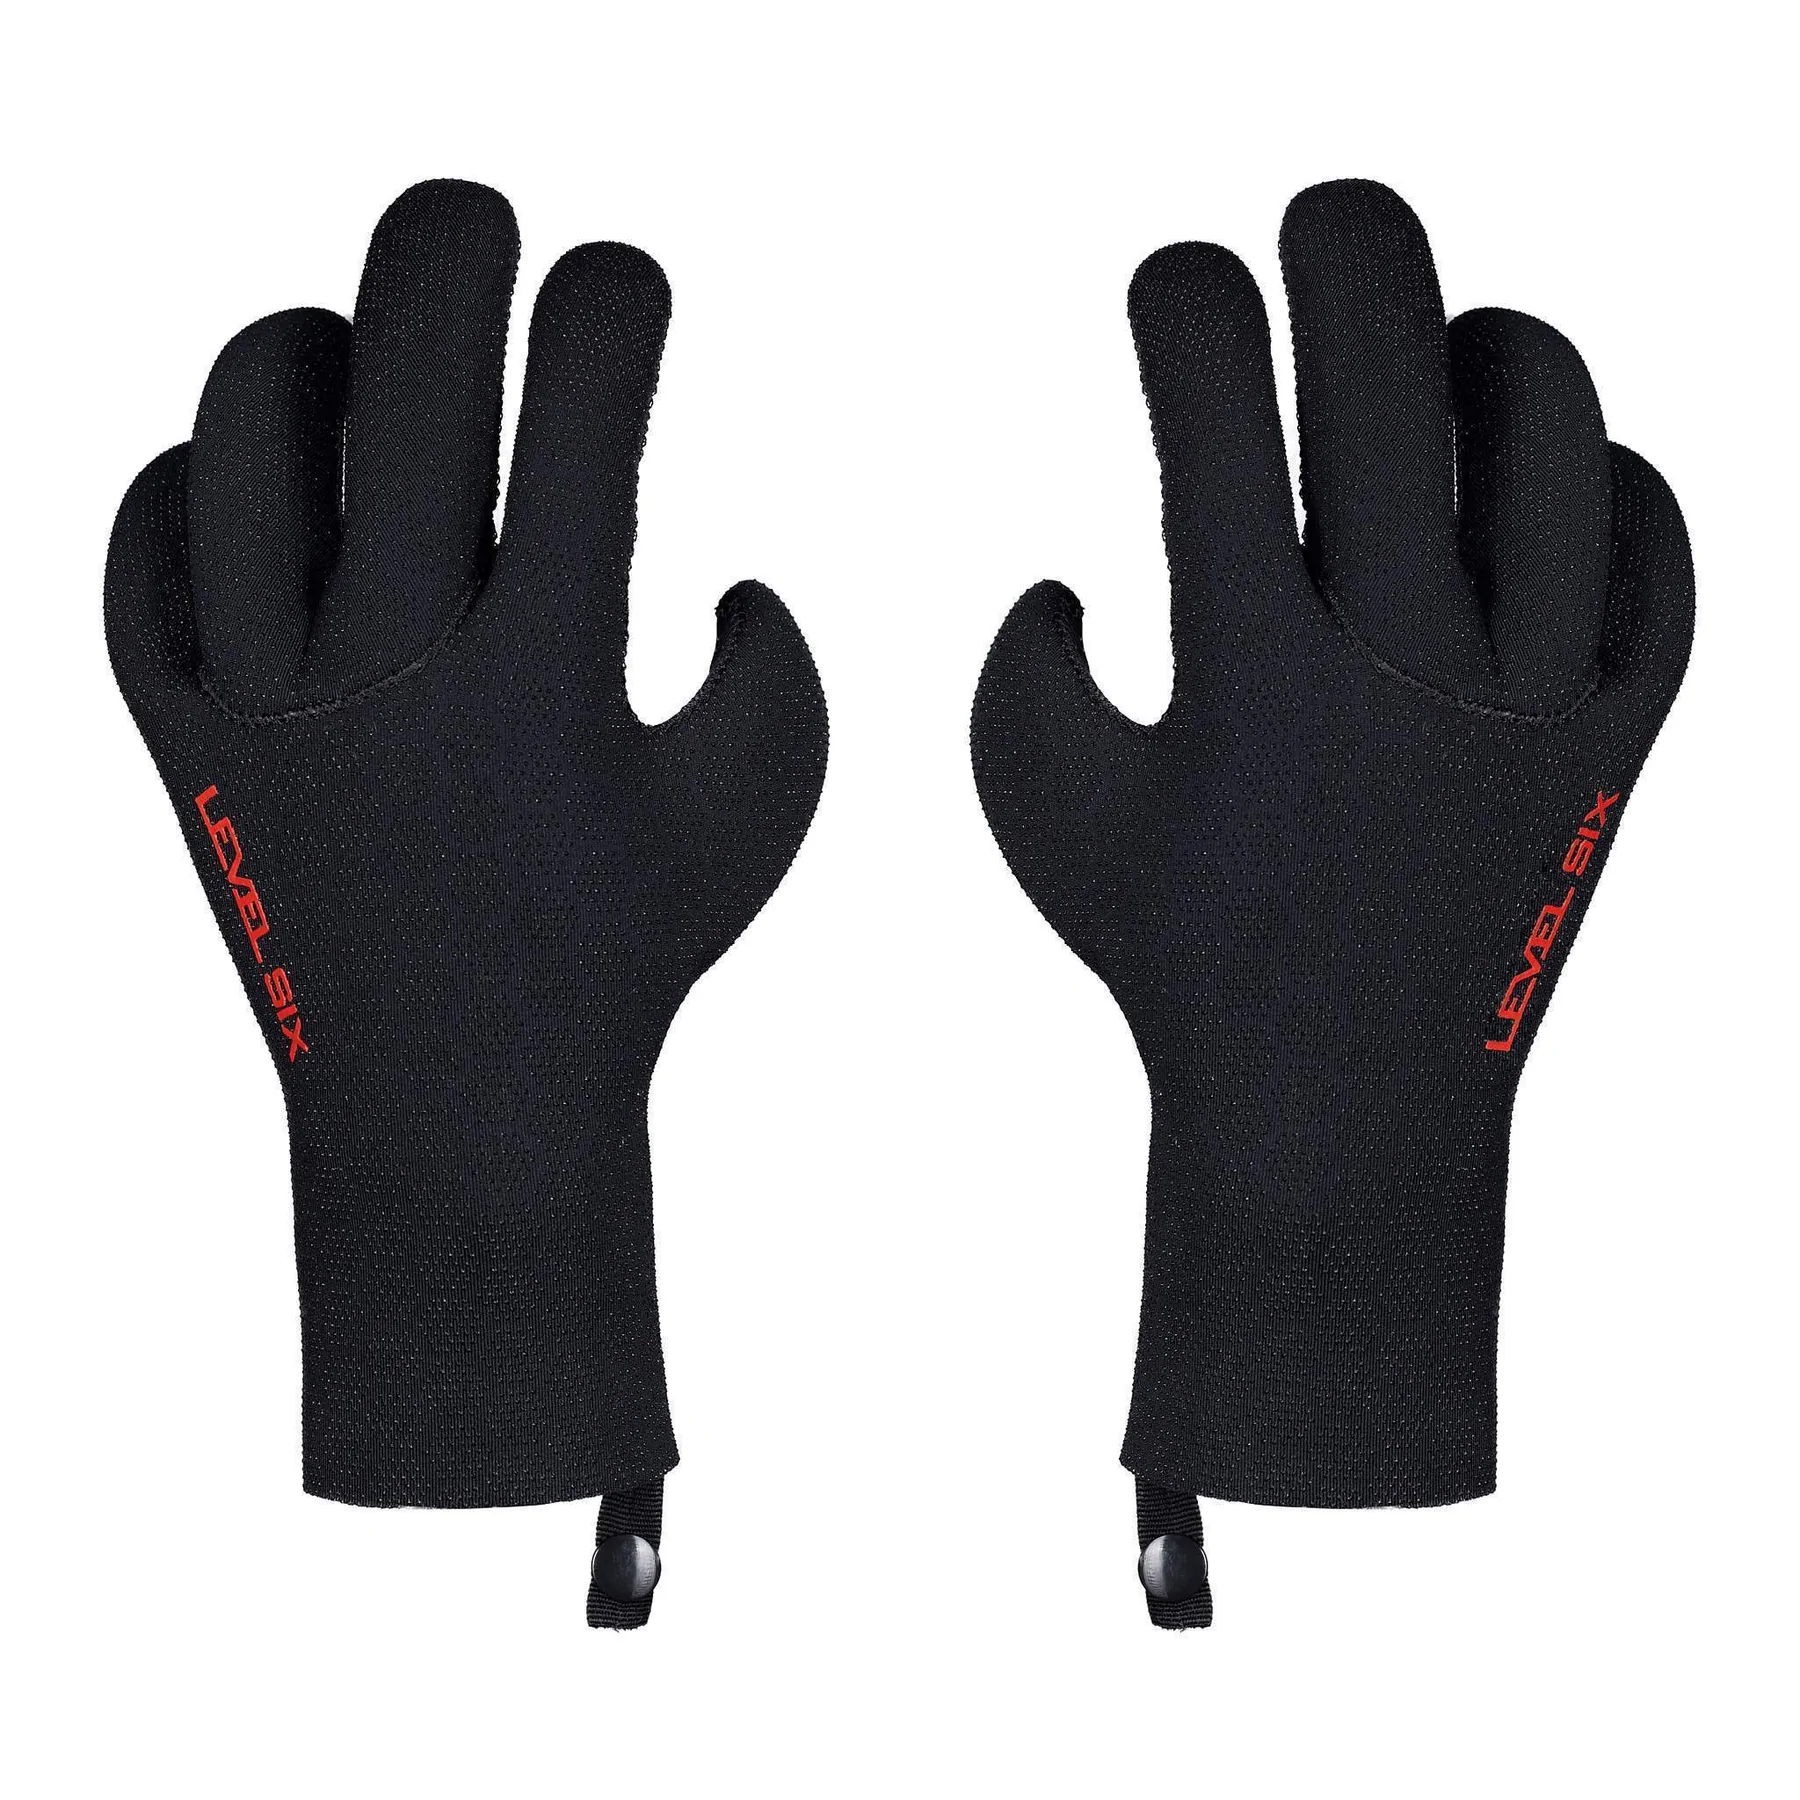 proton-glove-handwear-xs-level-six-7019185176656_5ce986ba-0972-49c5-bc95-86632bc8f8f6_1800x1800